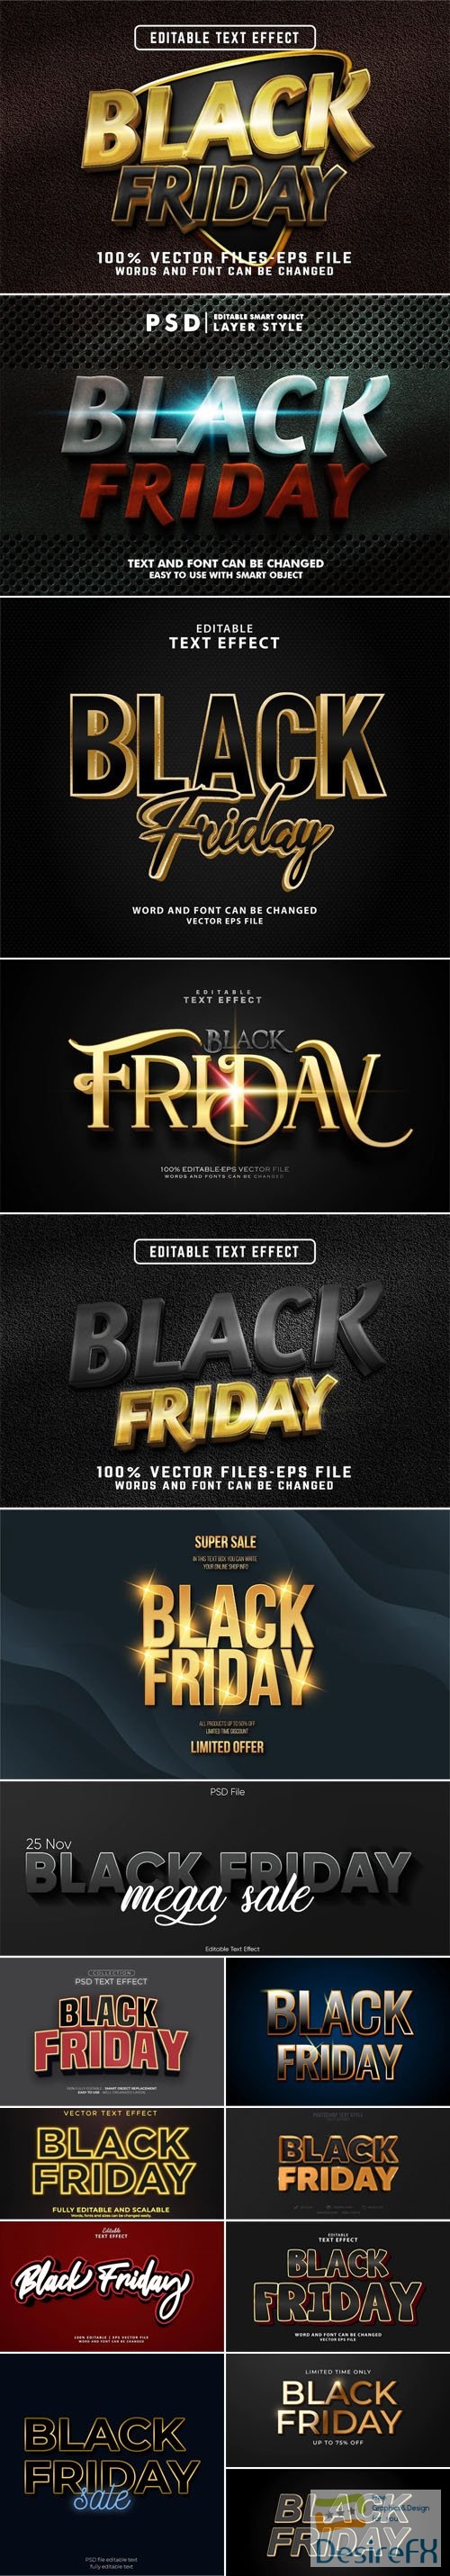 Modern Black Friday 3D Text Effects Vector Templates Vol.4